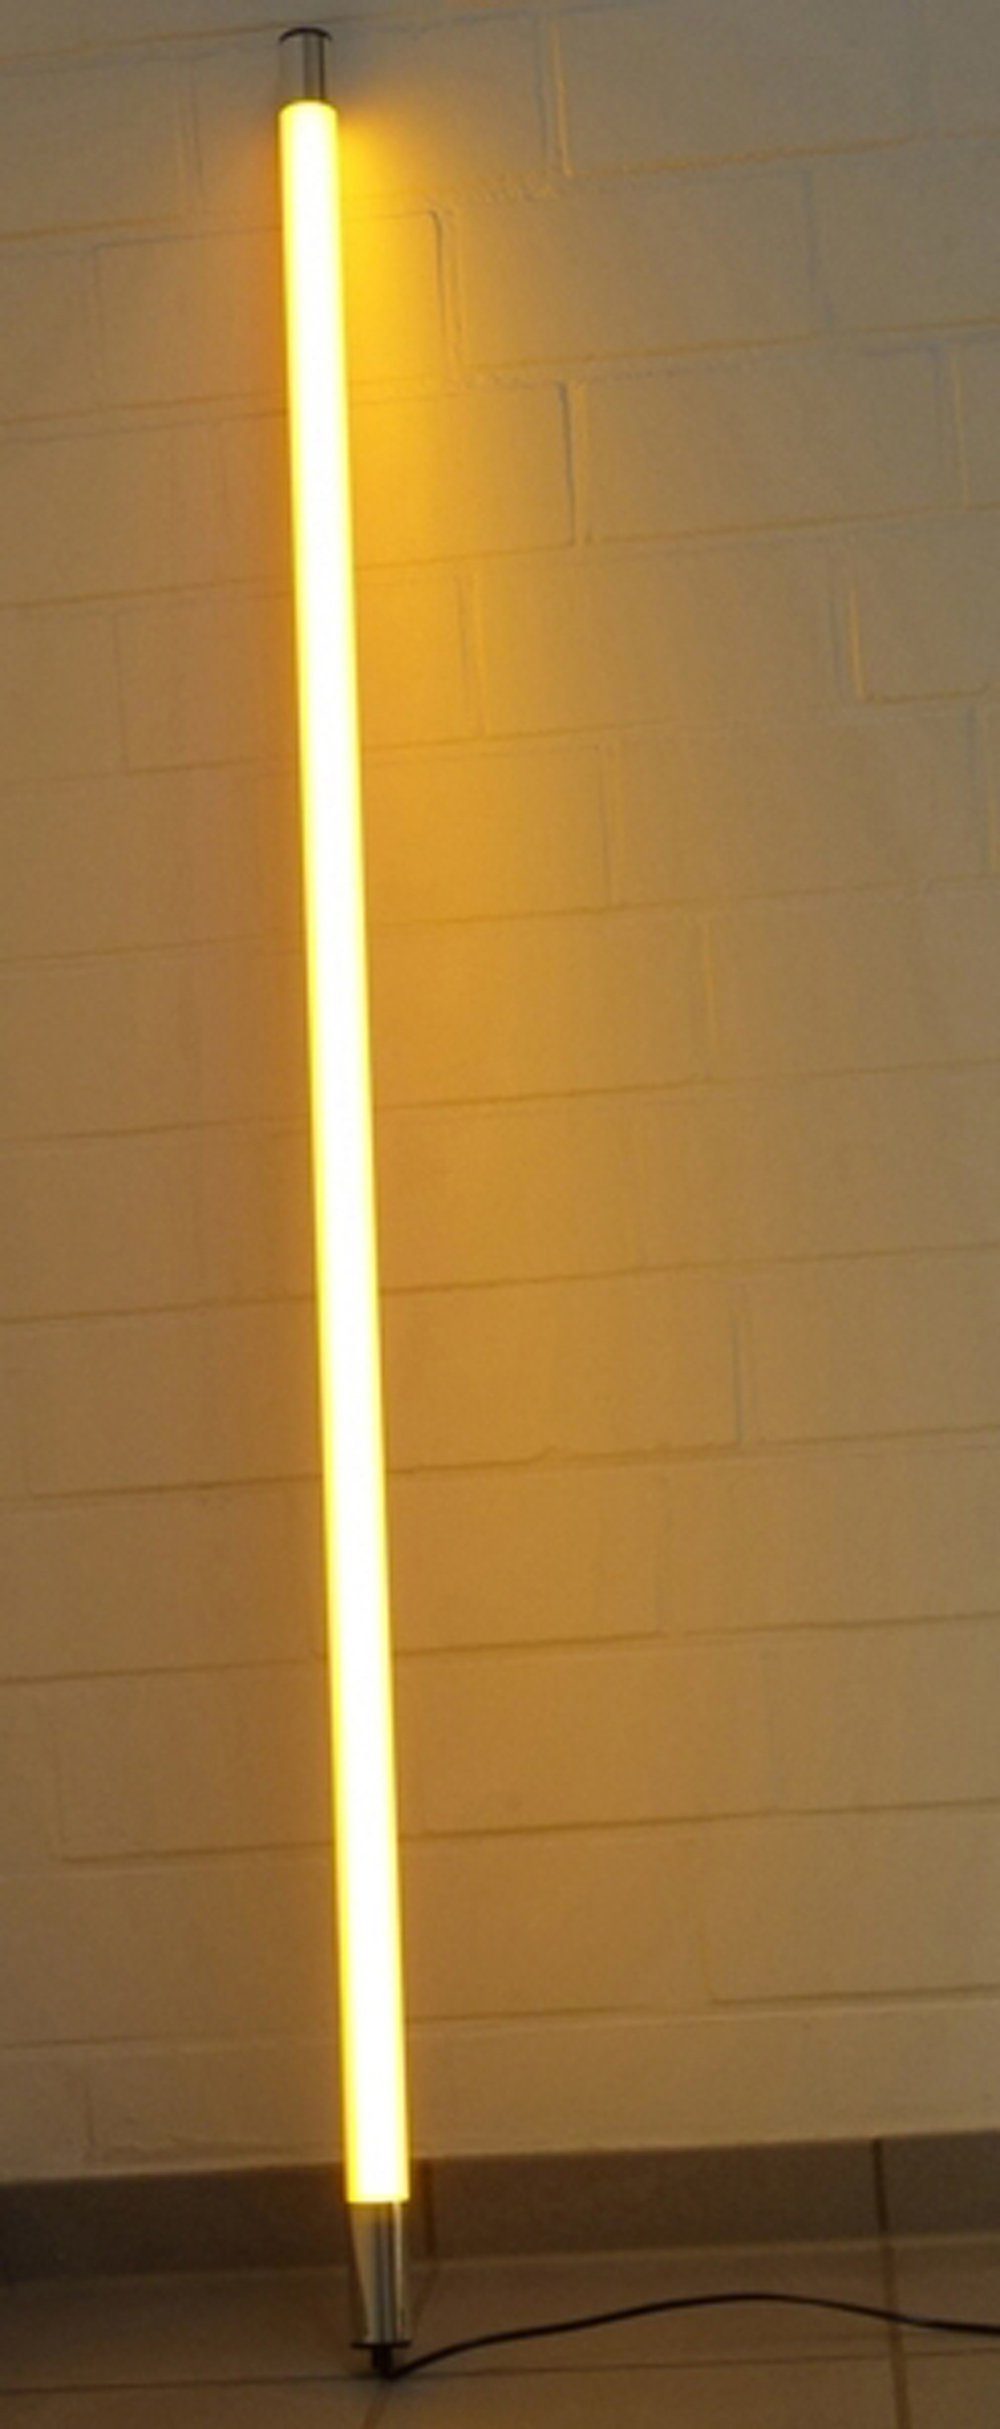 XENON LED Wandleuchte 8640 LED Leuchtstab Satiniert 1,53m Lang 2500 Lumen IP44 Außen Orange, LED, Xenon / Orange